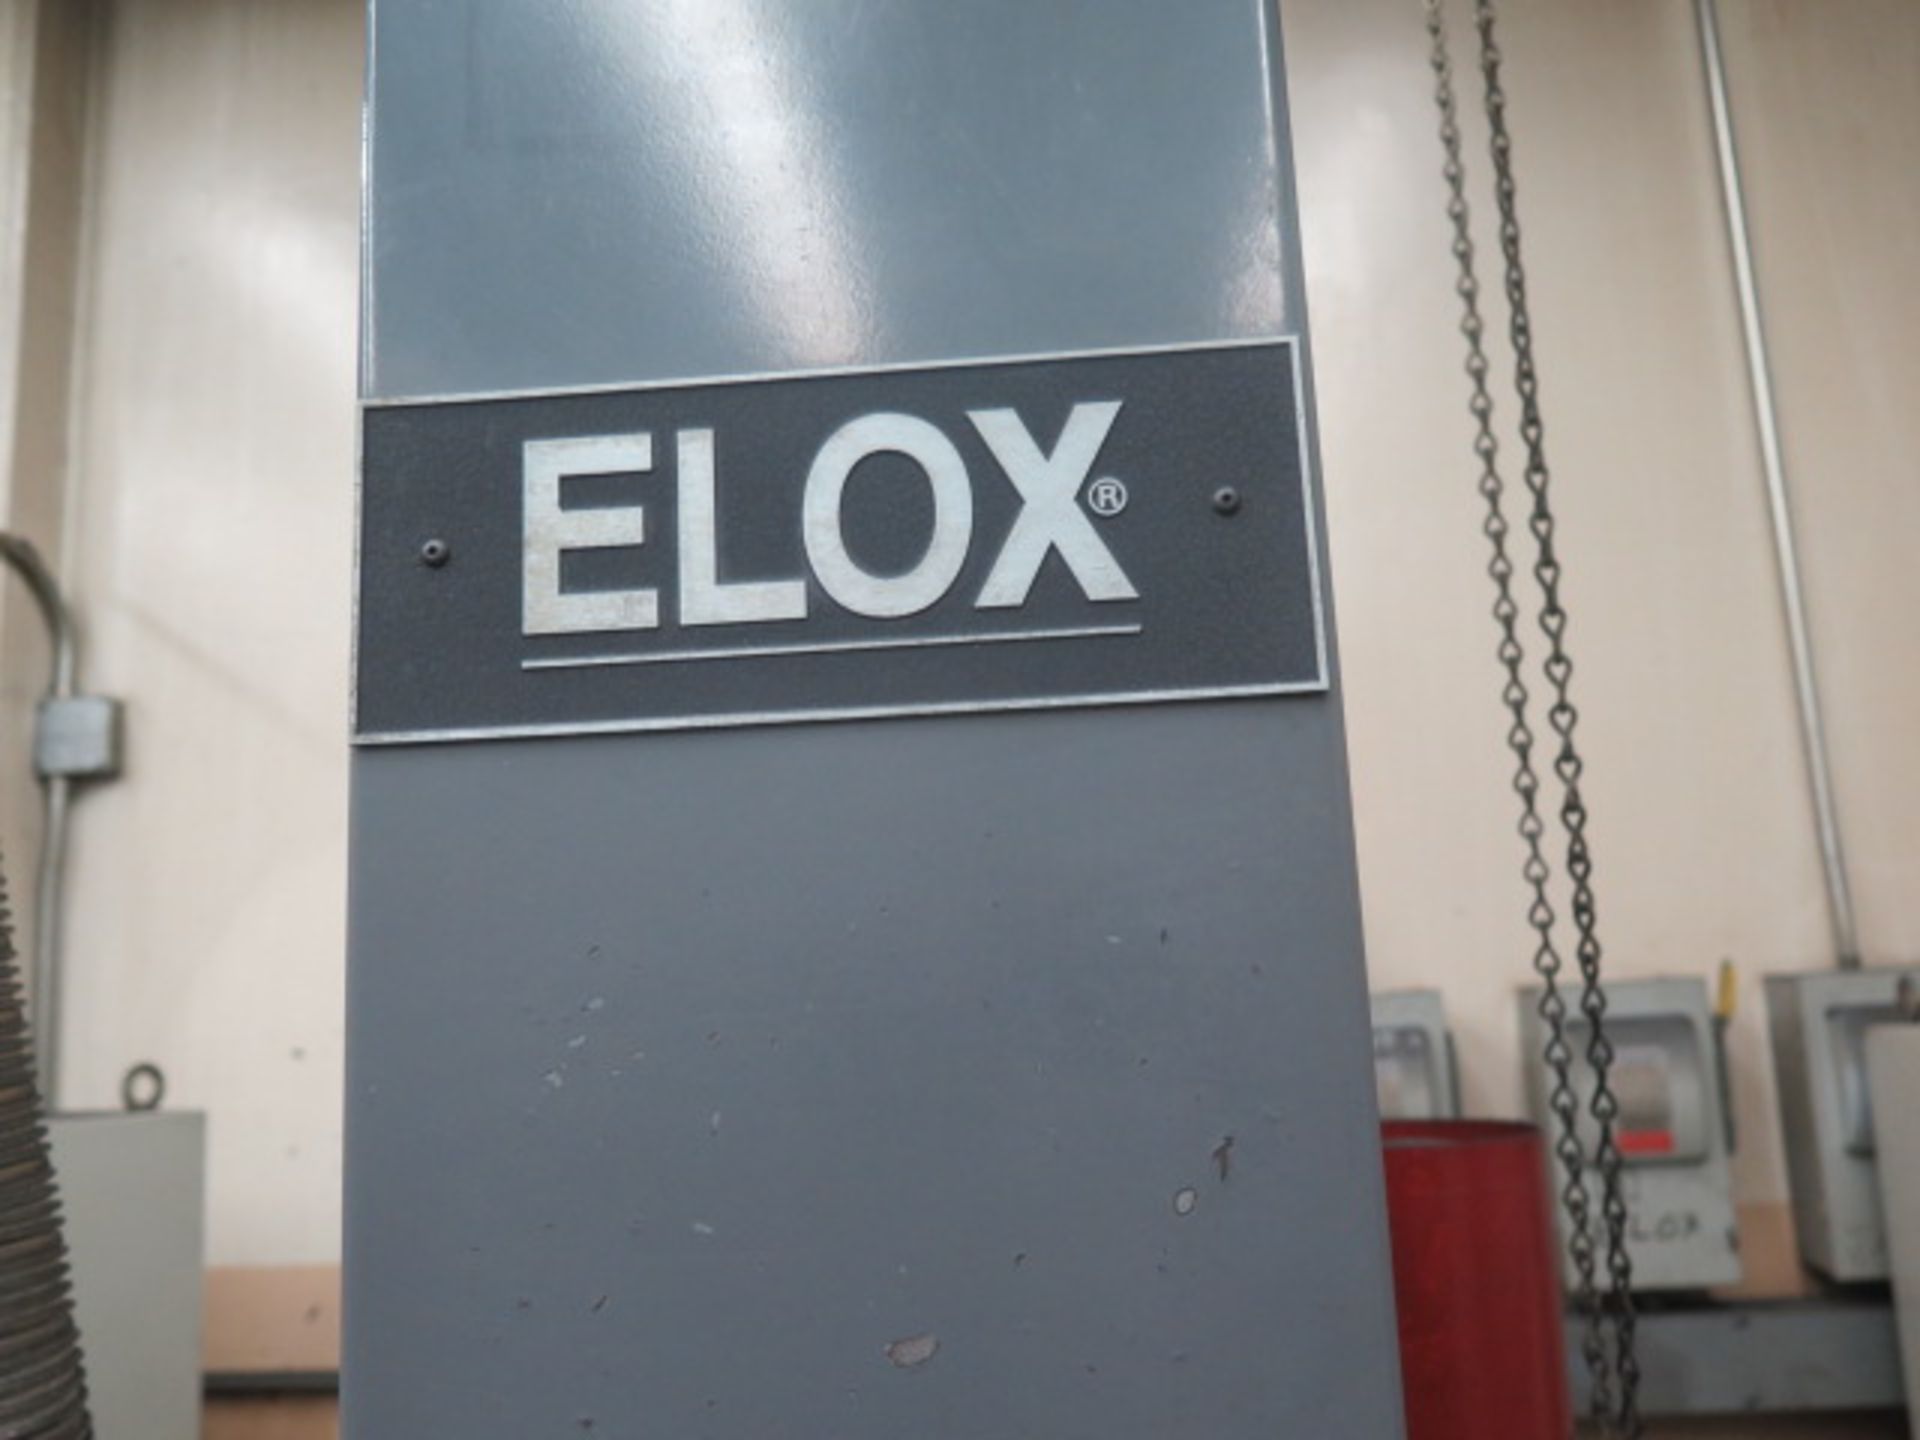 Elox Workmaster 45 Die Sinker EDM Machine w/ Elox Futura Controls, Coolant System, Halon Auto Fire - Image 3 of 9